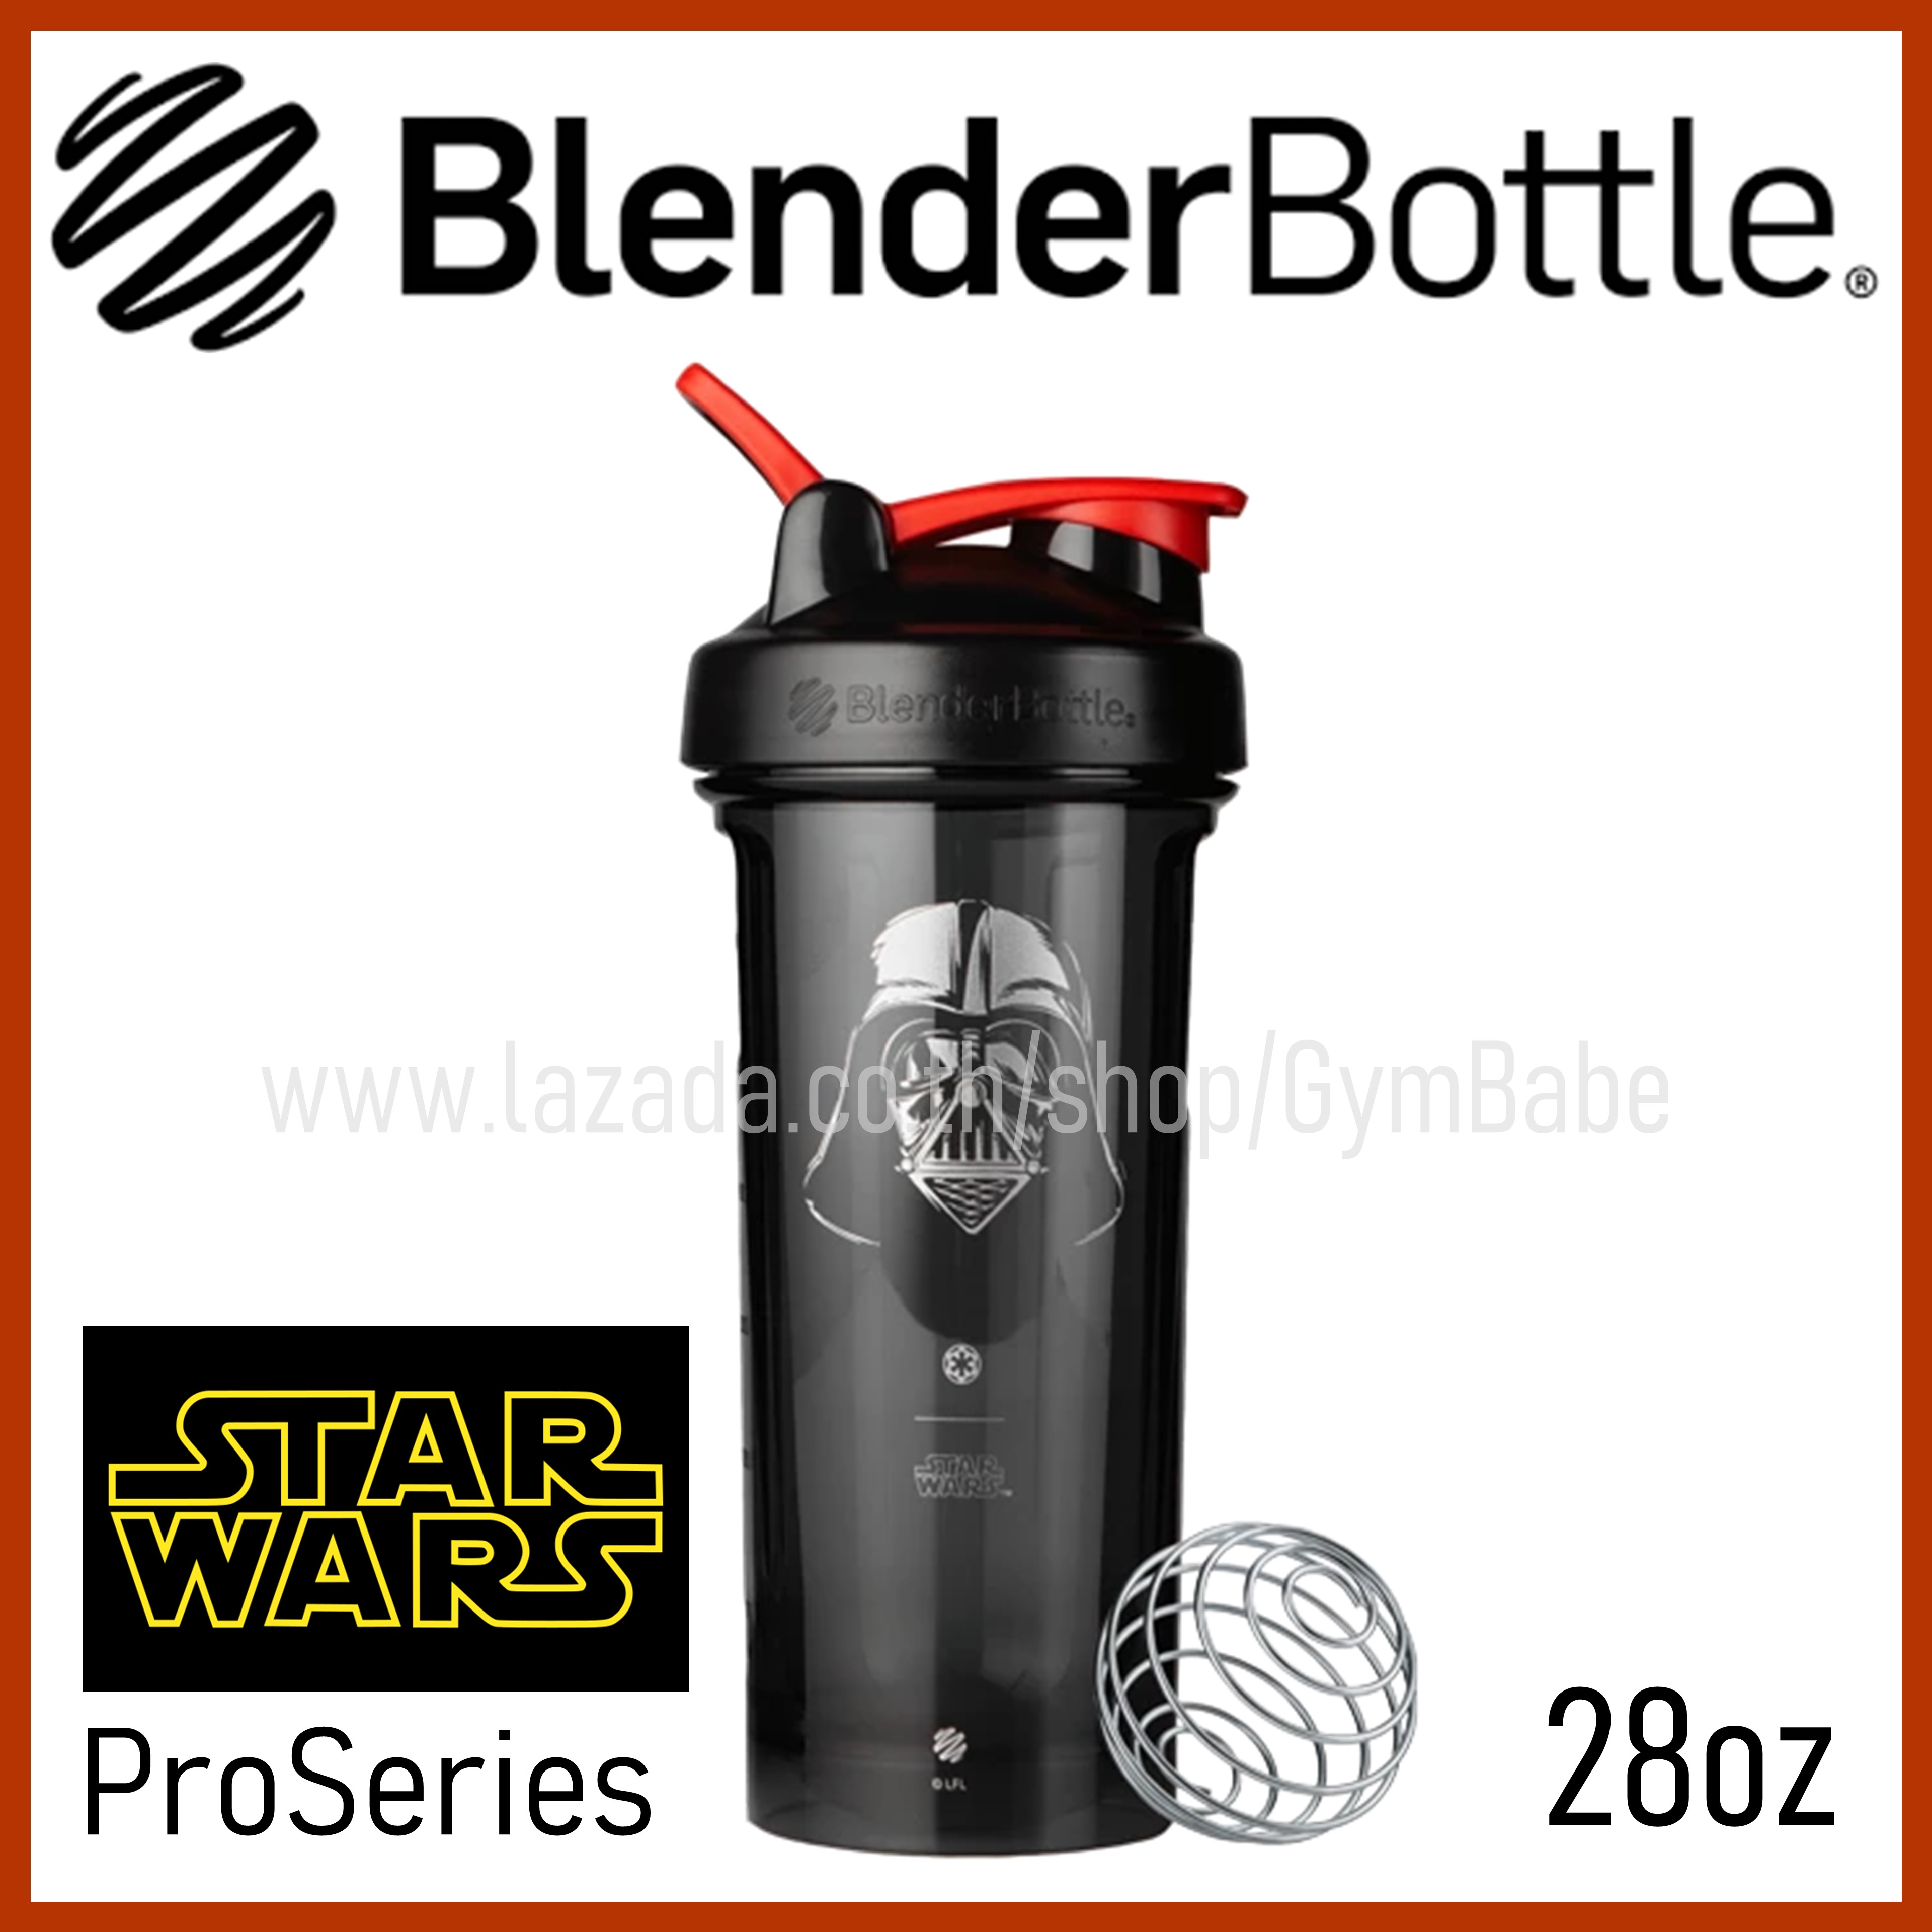 Starwars Official Licensed Edition แก้วเชค BlenderBottle รุ่น Pro ขนาด 28oz แก้วShake Blender Bottle ของแท้